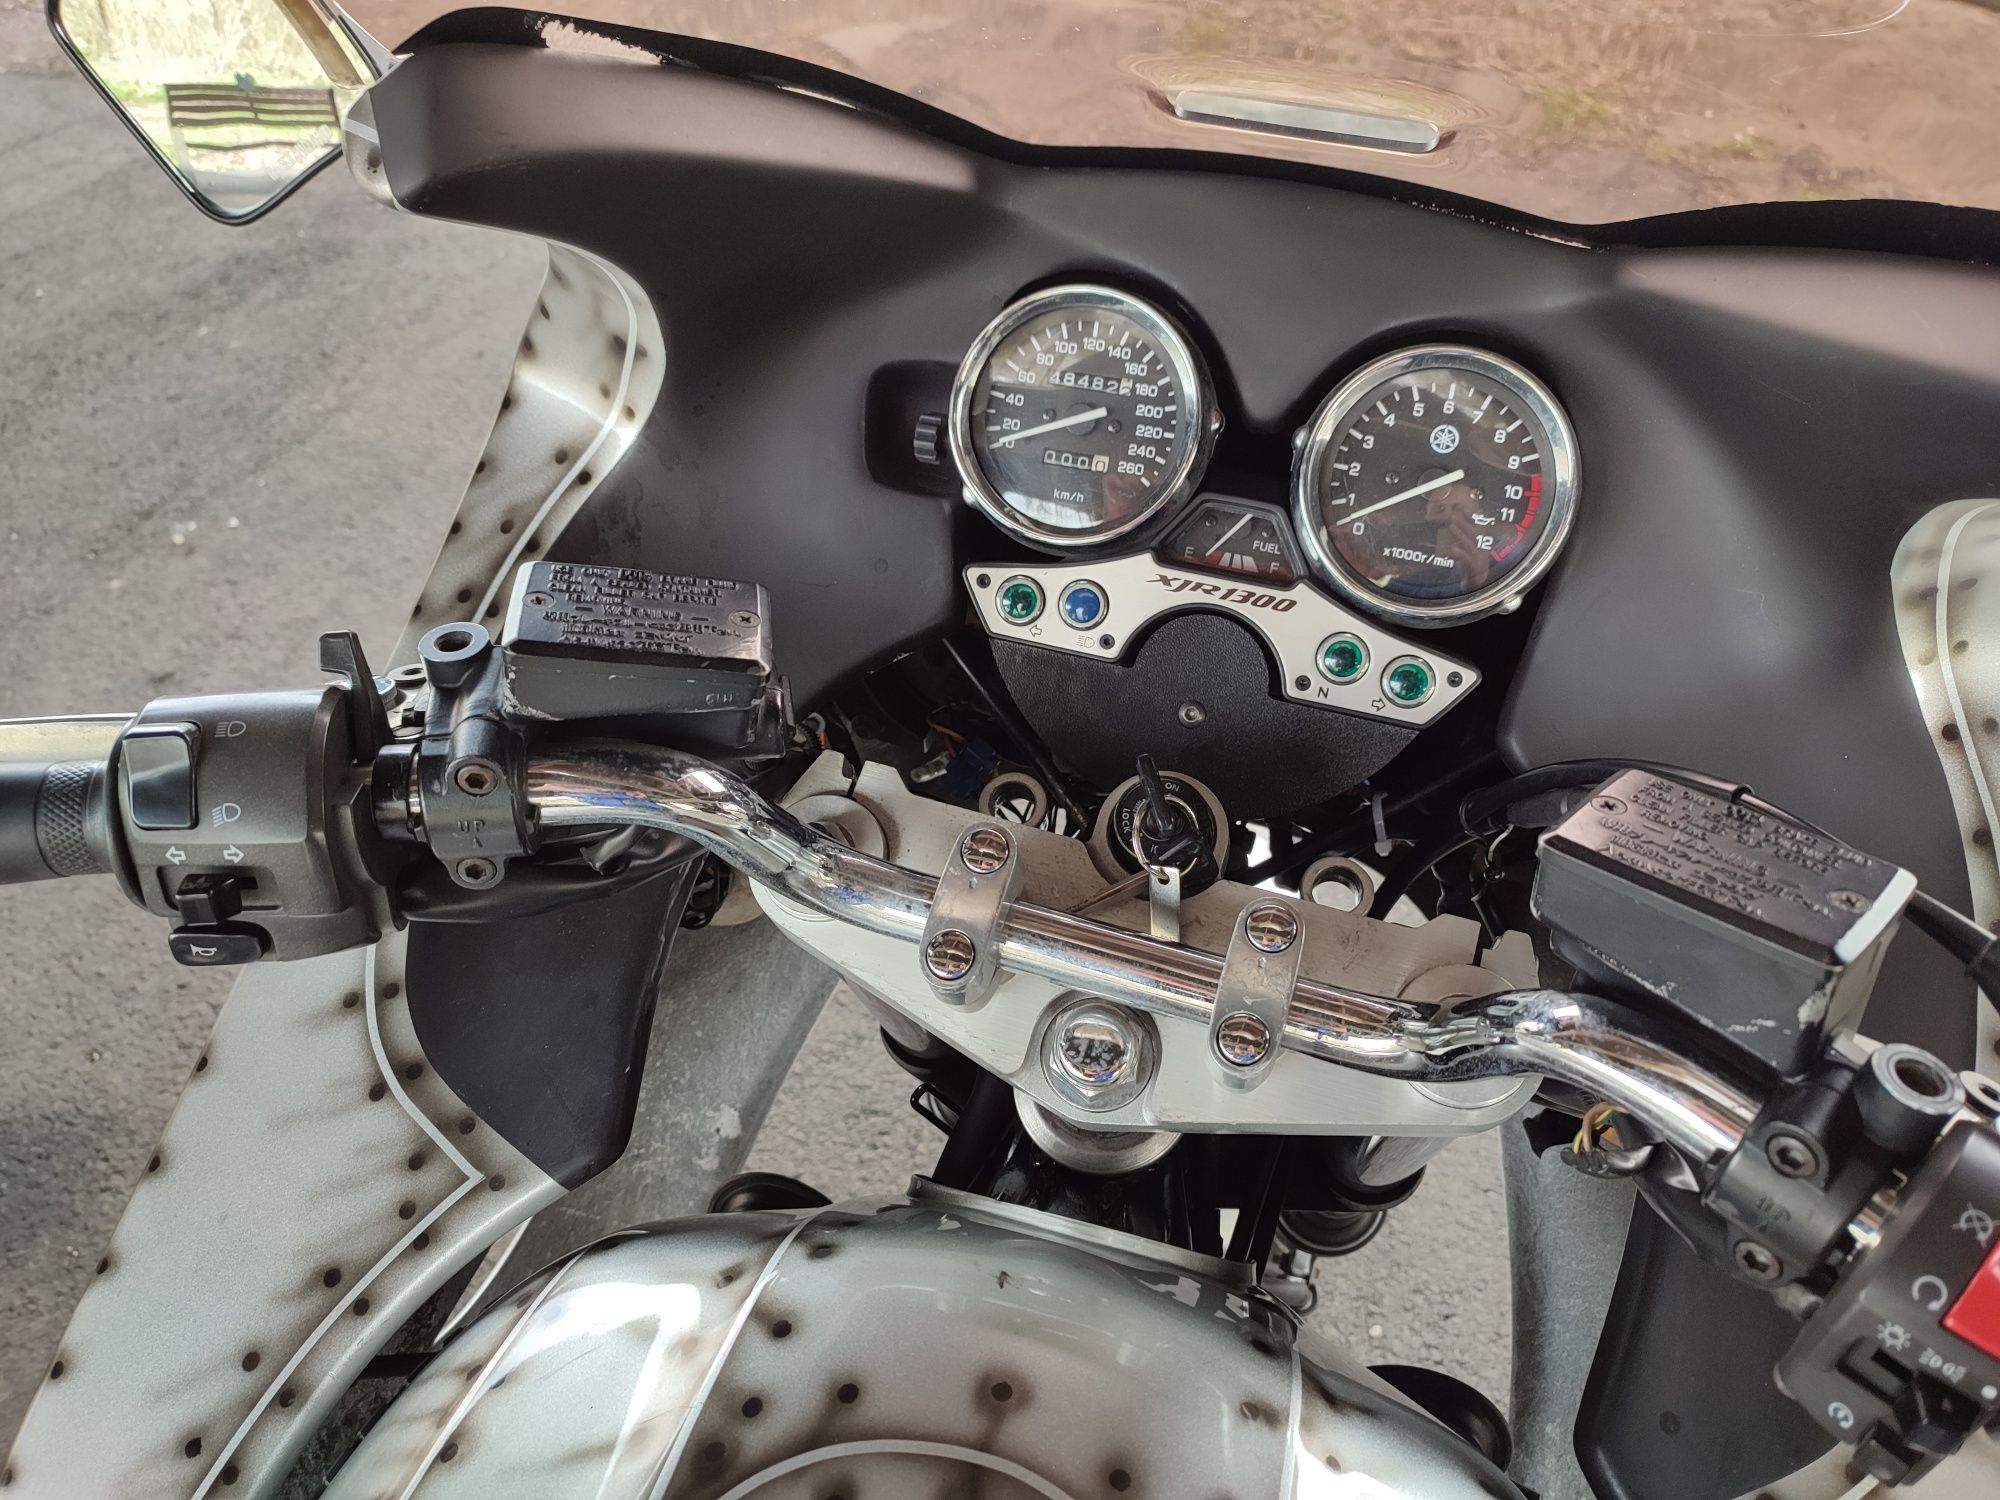 Yamaha xjr 1300 #Mad Max# Areograf#48482 km